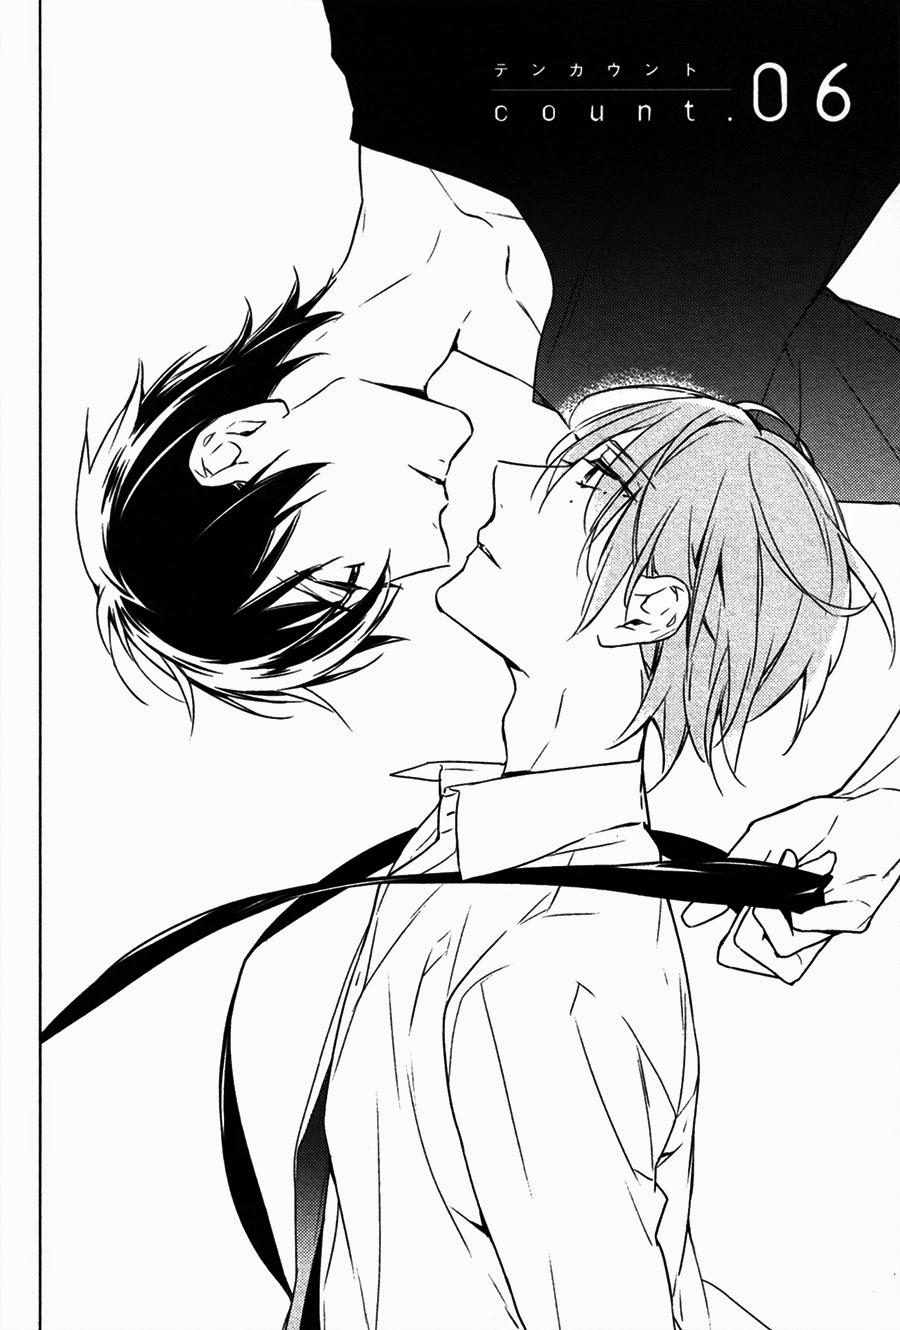 Манга доминанта. Куросе Рику и Широтани Тадаоми поцелуй. Manga Yaoi до десяти. Тадаоми Широтани поцелуй. Яой Манга до десяти поцелуй.